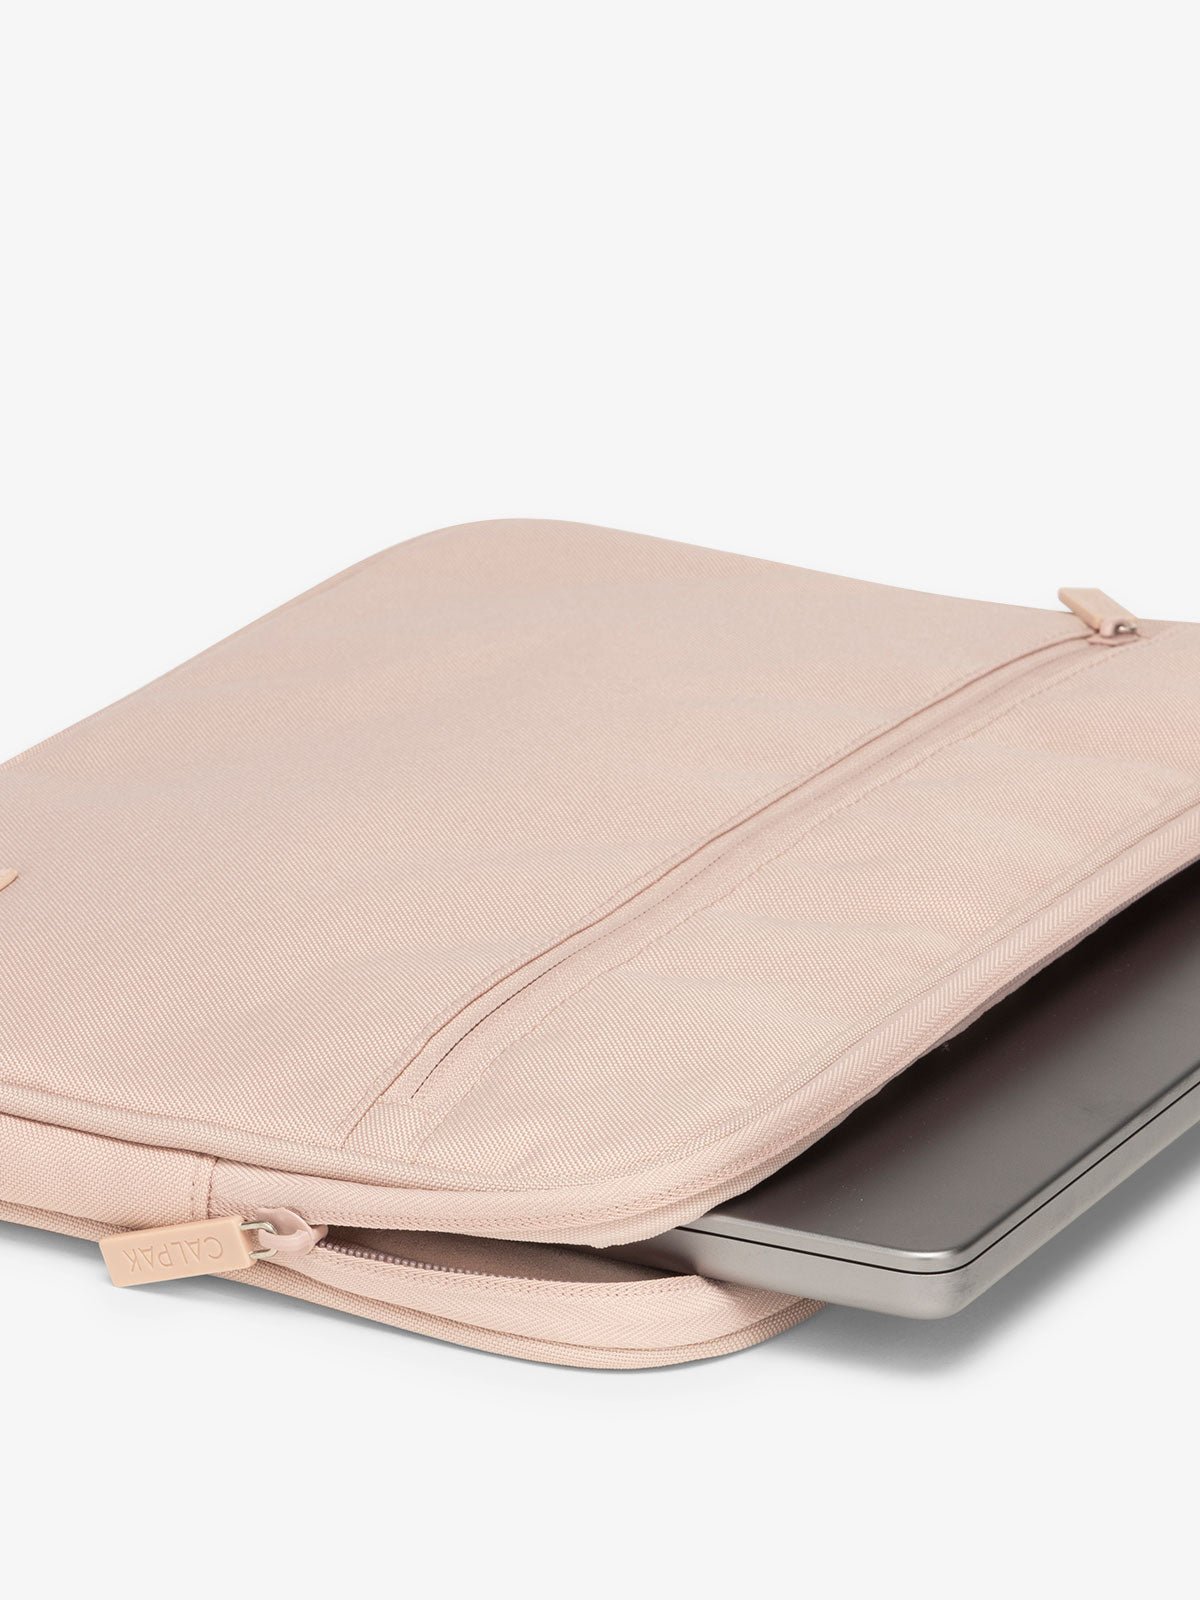 CALPAK 13-14 Inch water resistant Laptop Sleeve for women in pink